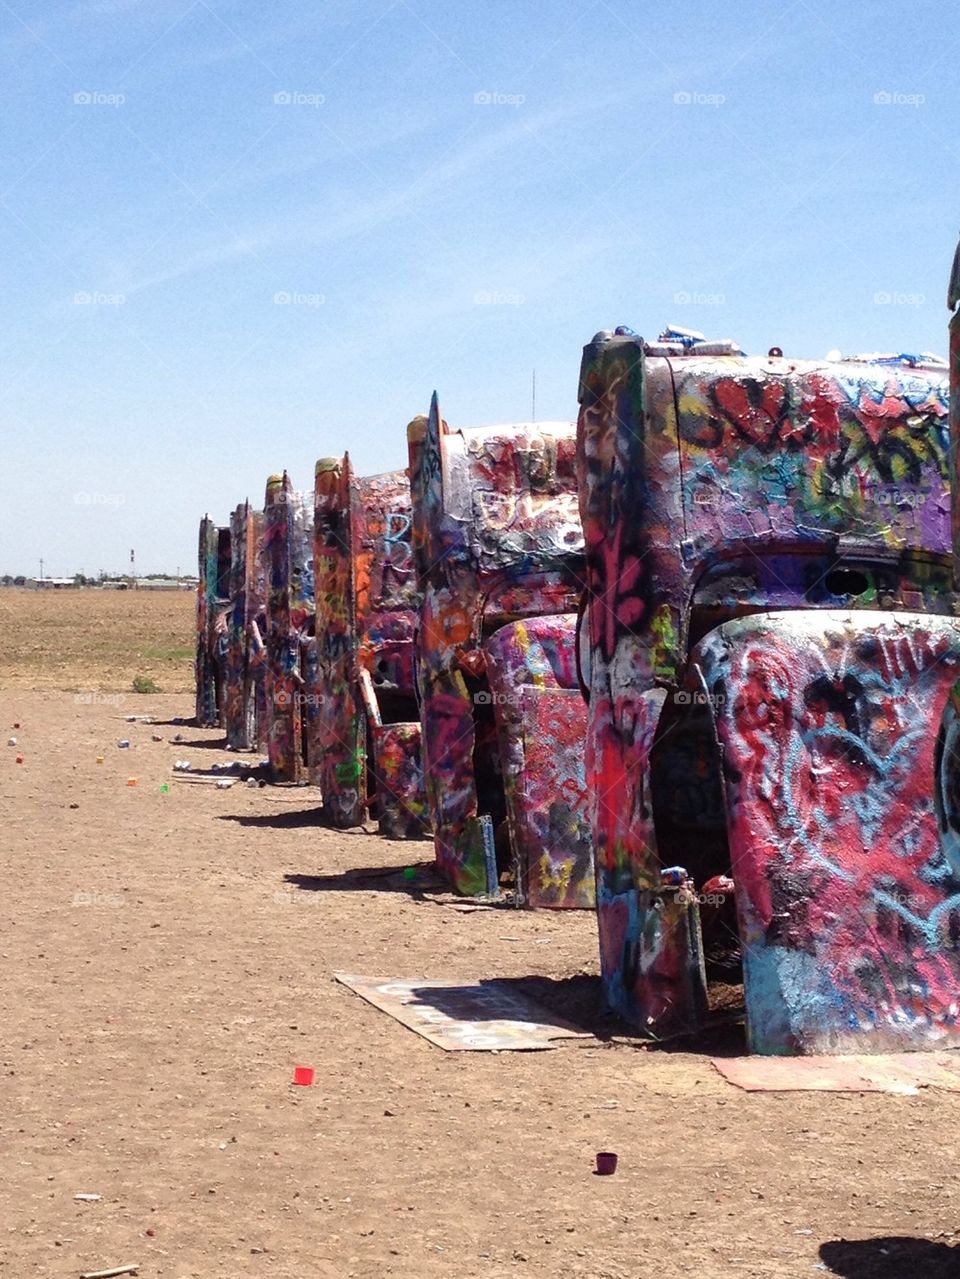 graffiti spray paint texas cadillac by chris.johndrow